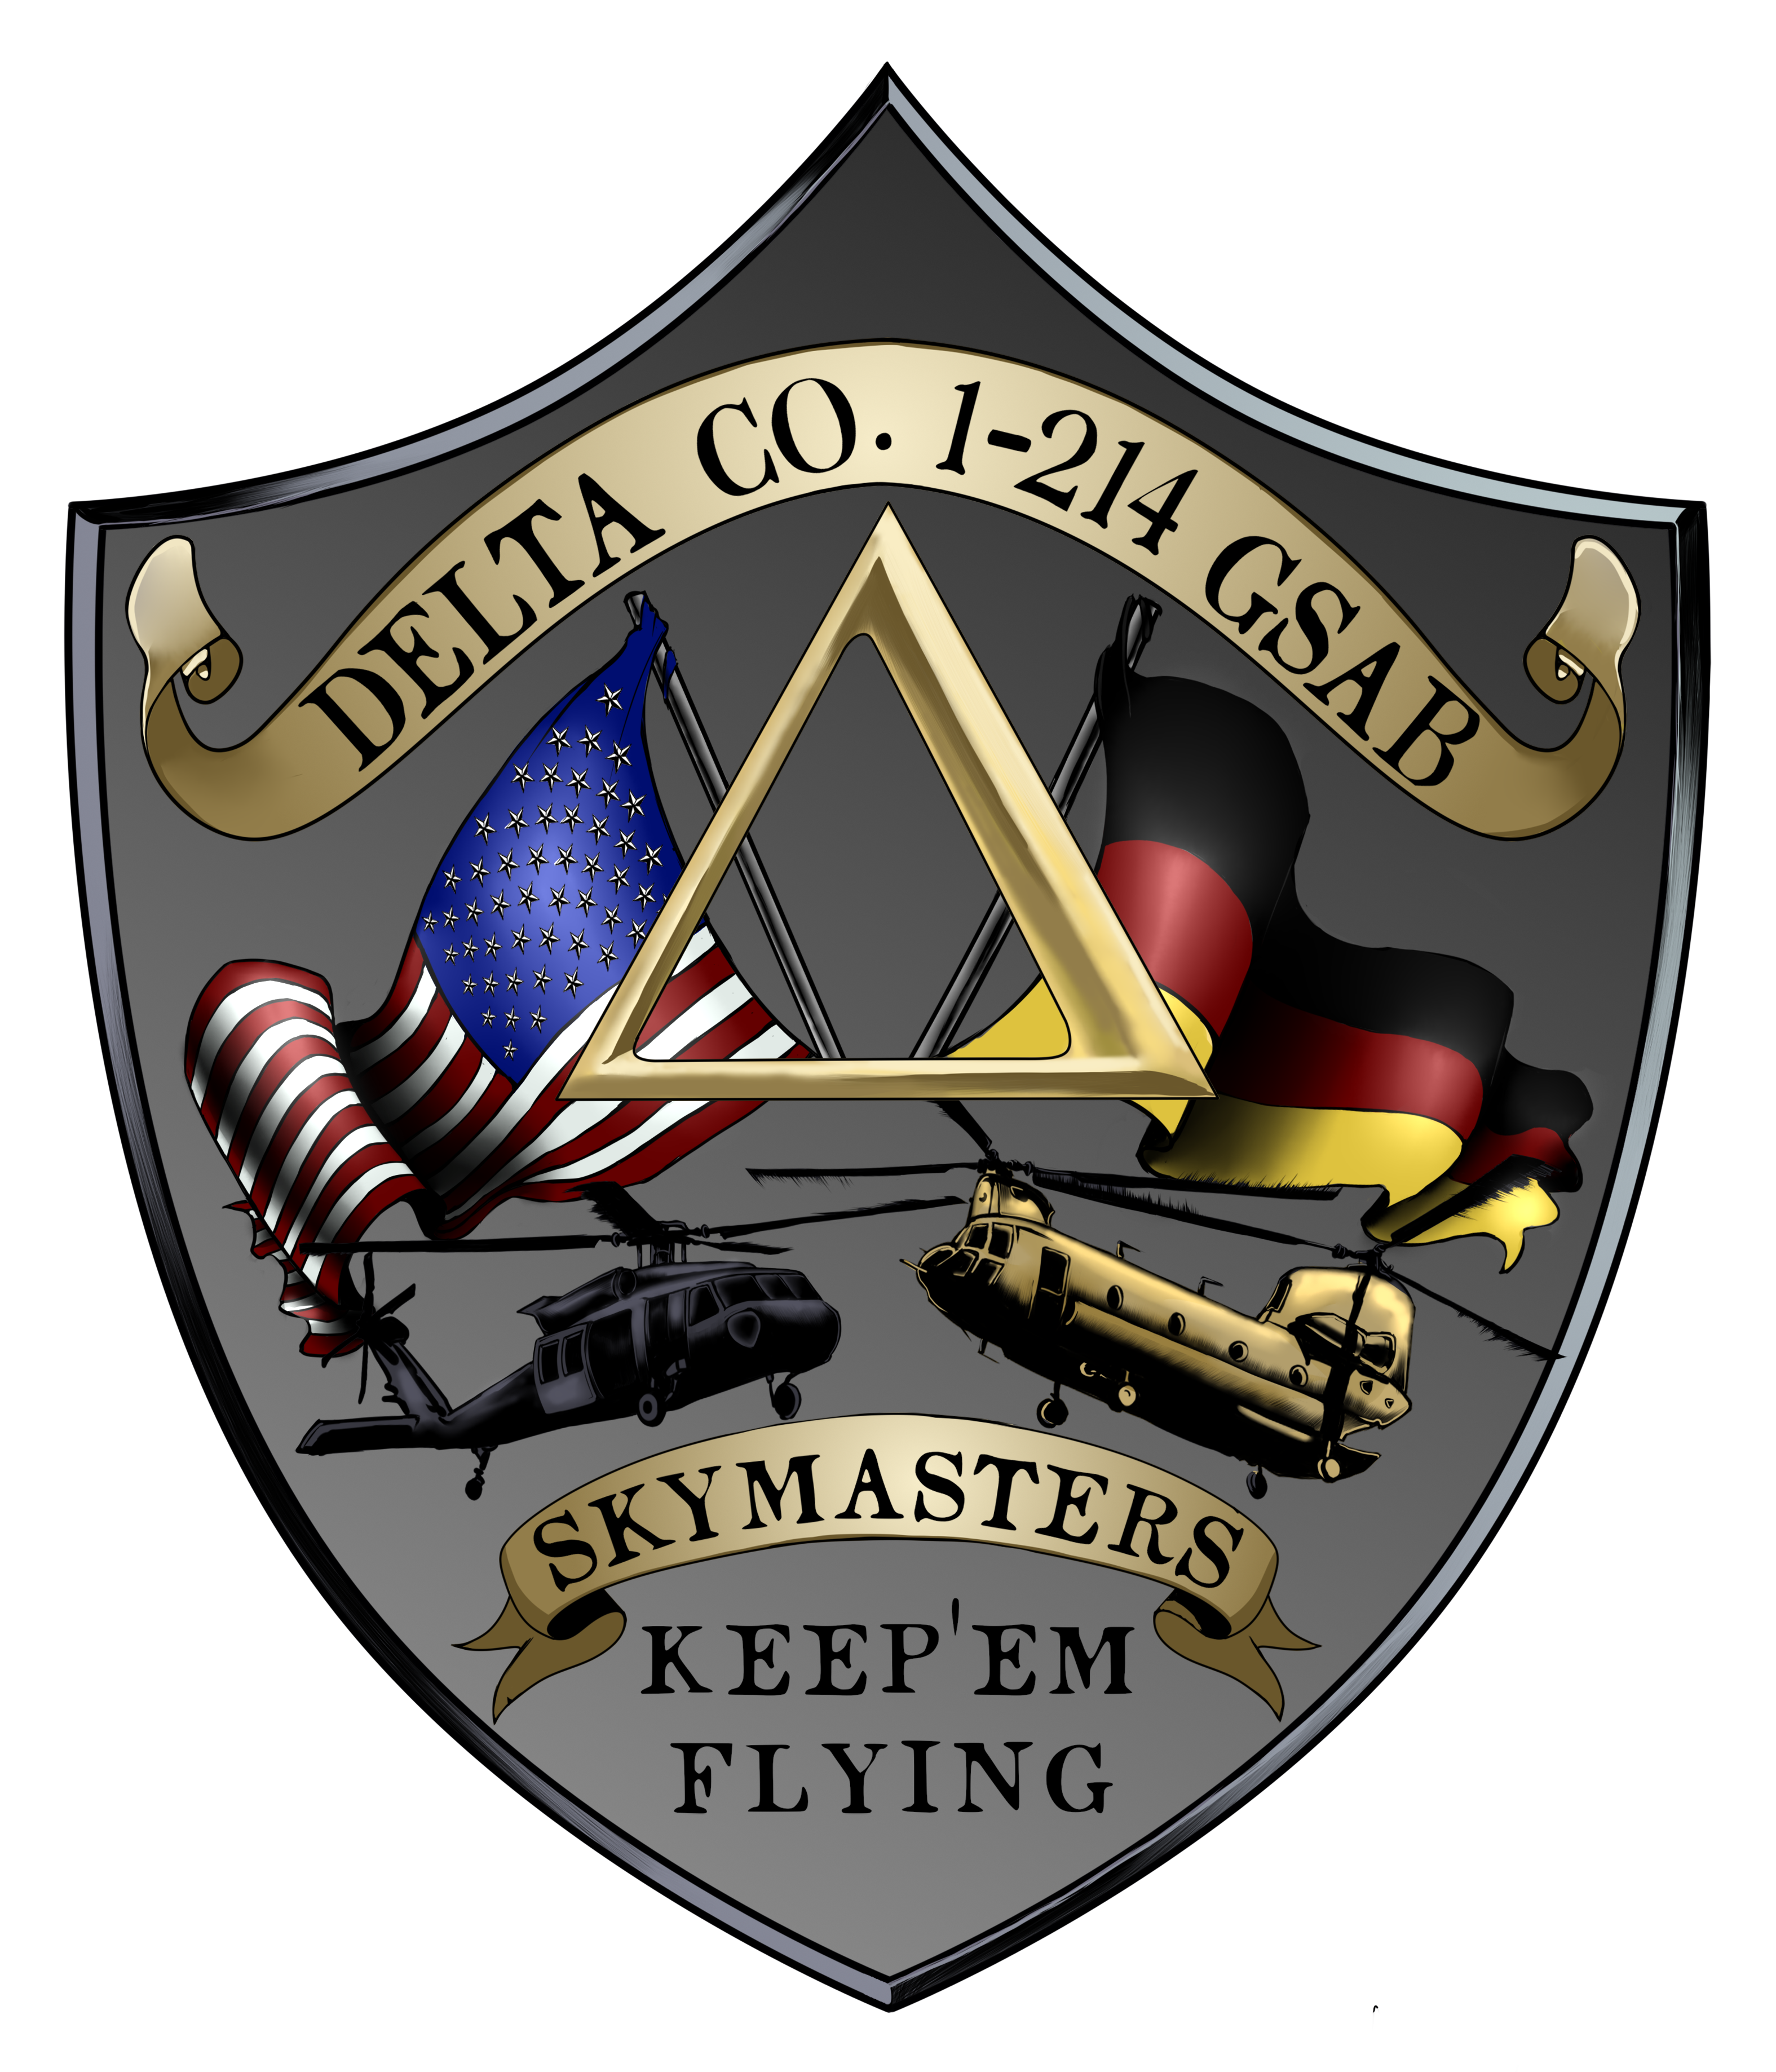 D Co, 1-214 GSAB "Skymasters"